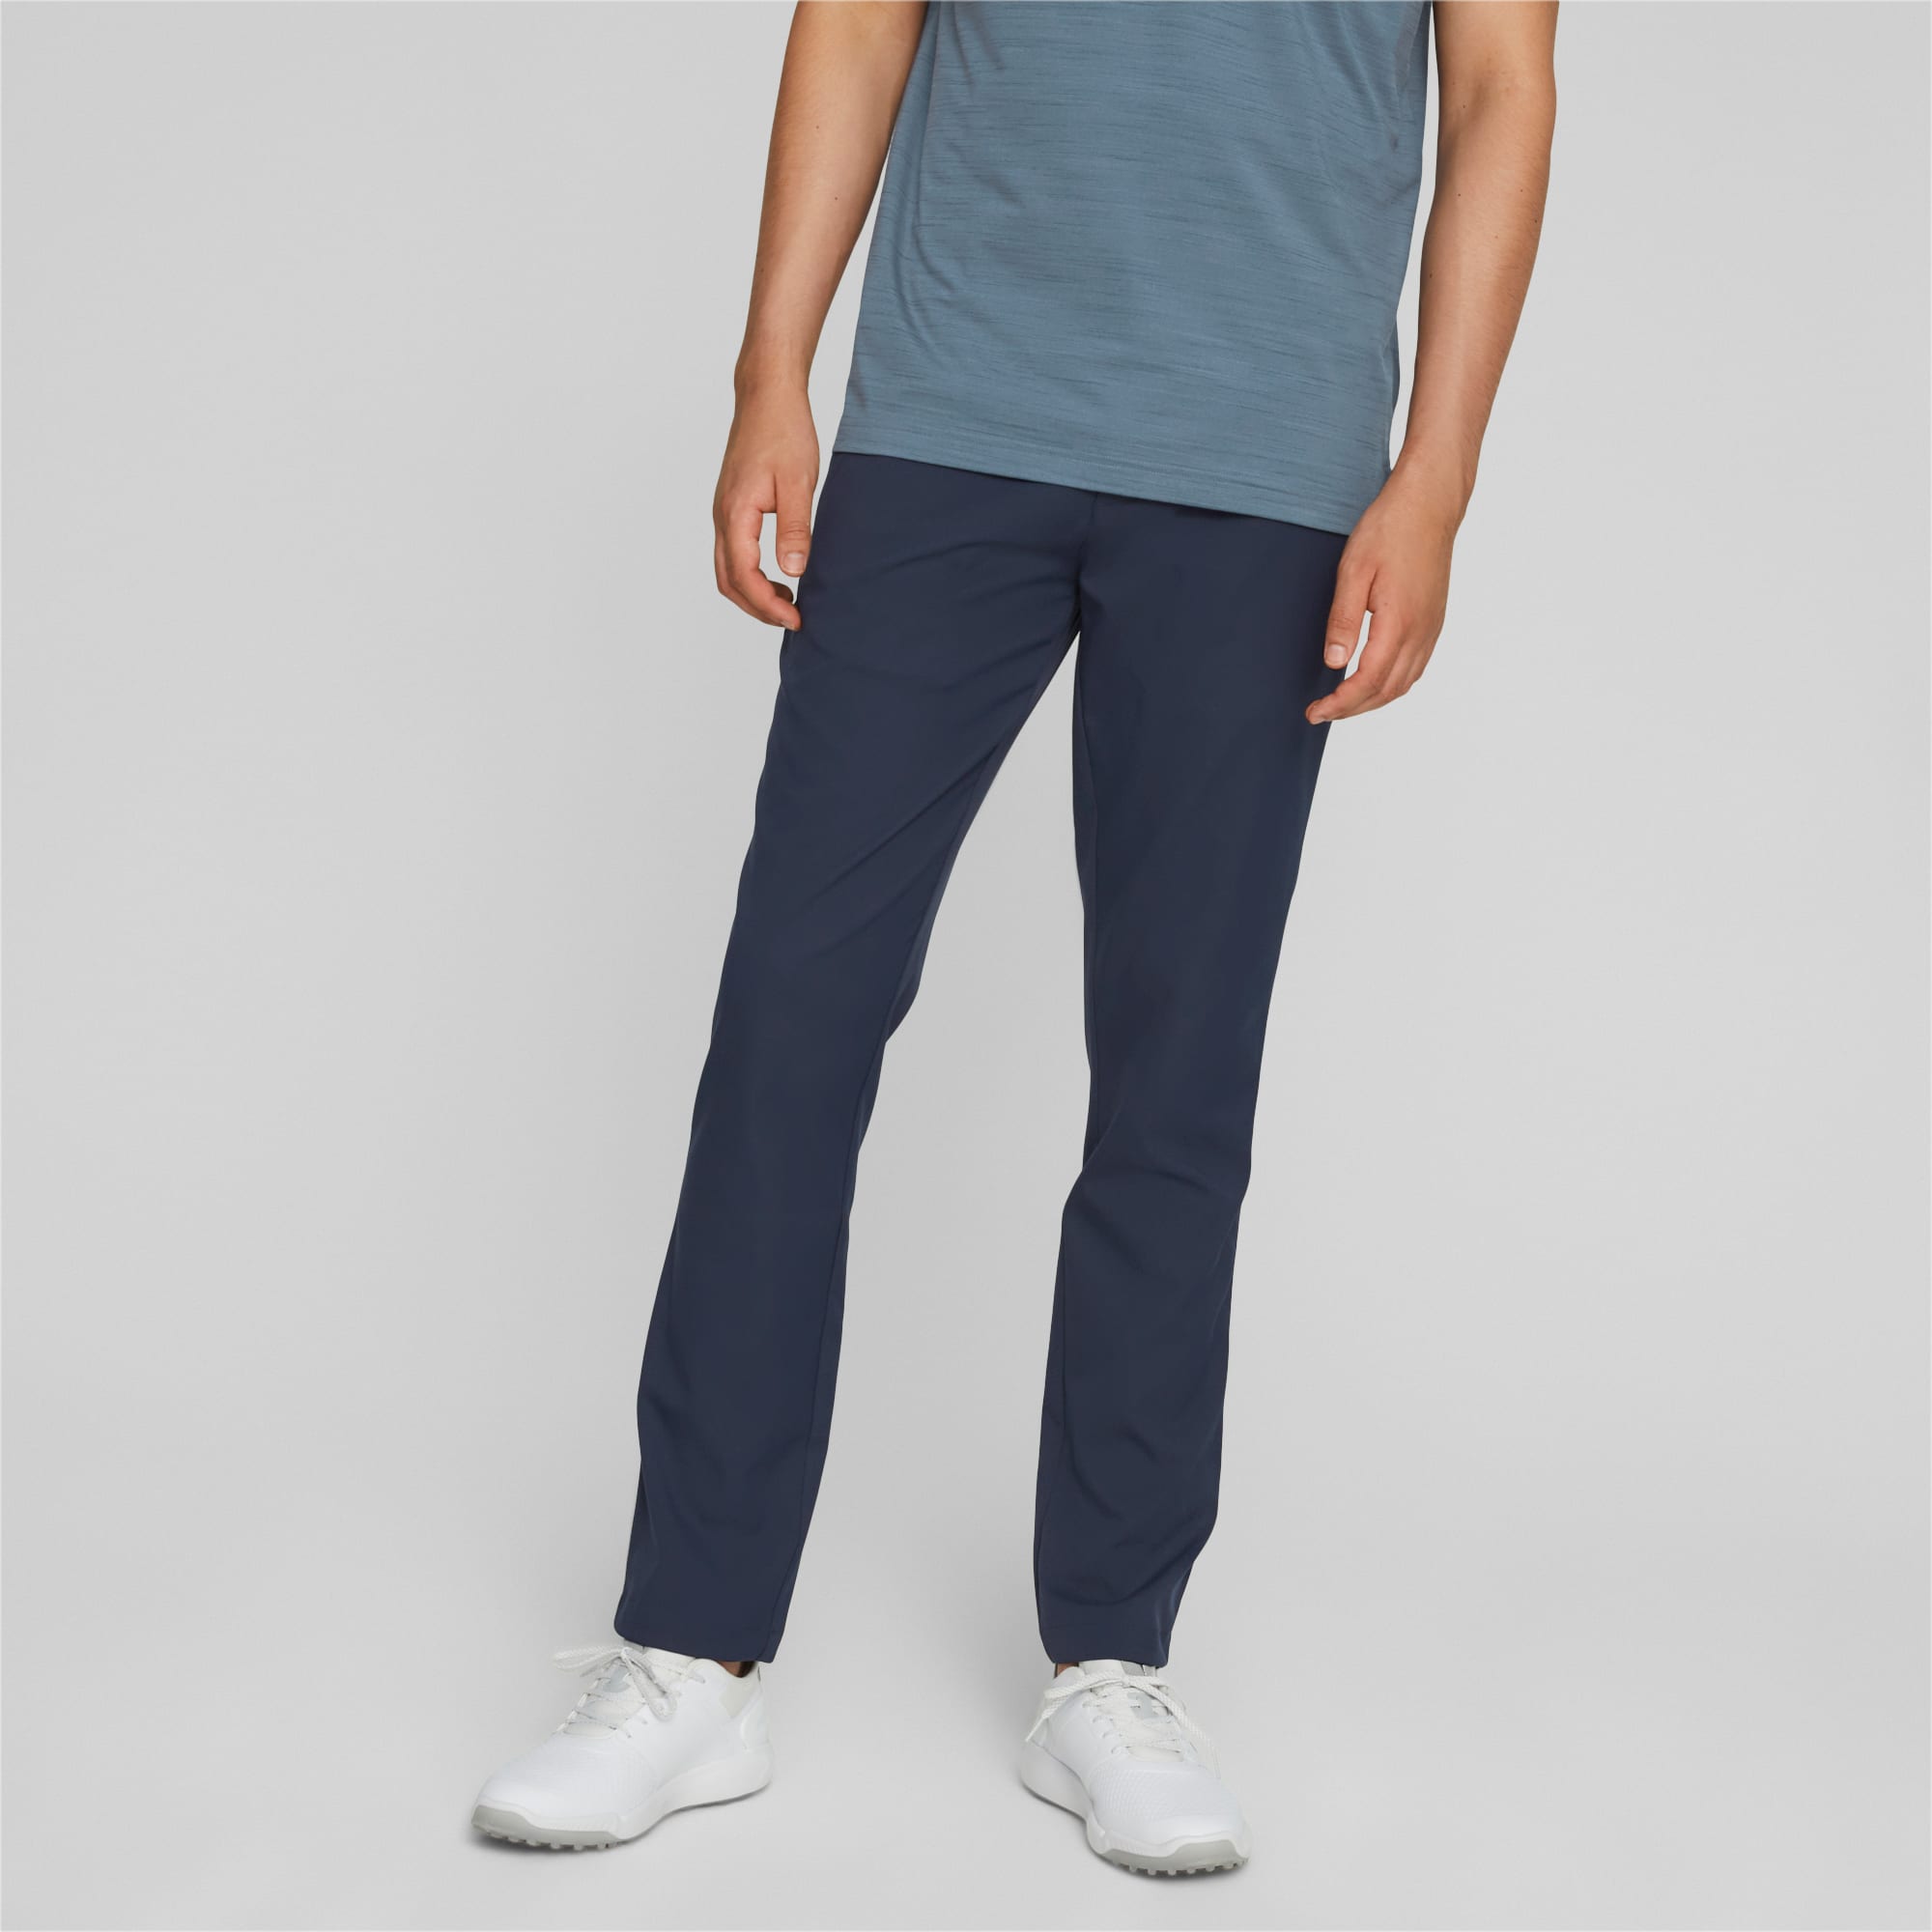 PUMA Dealer Tailored Golf Pants Men, Dark Blue, Size 35/30, Clothing